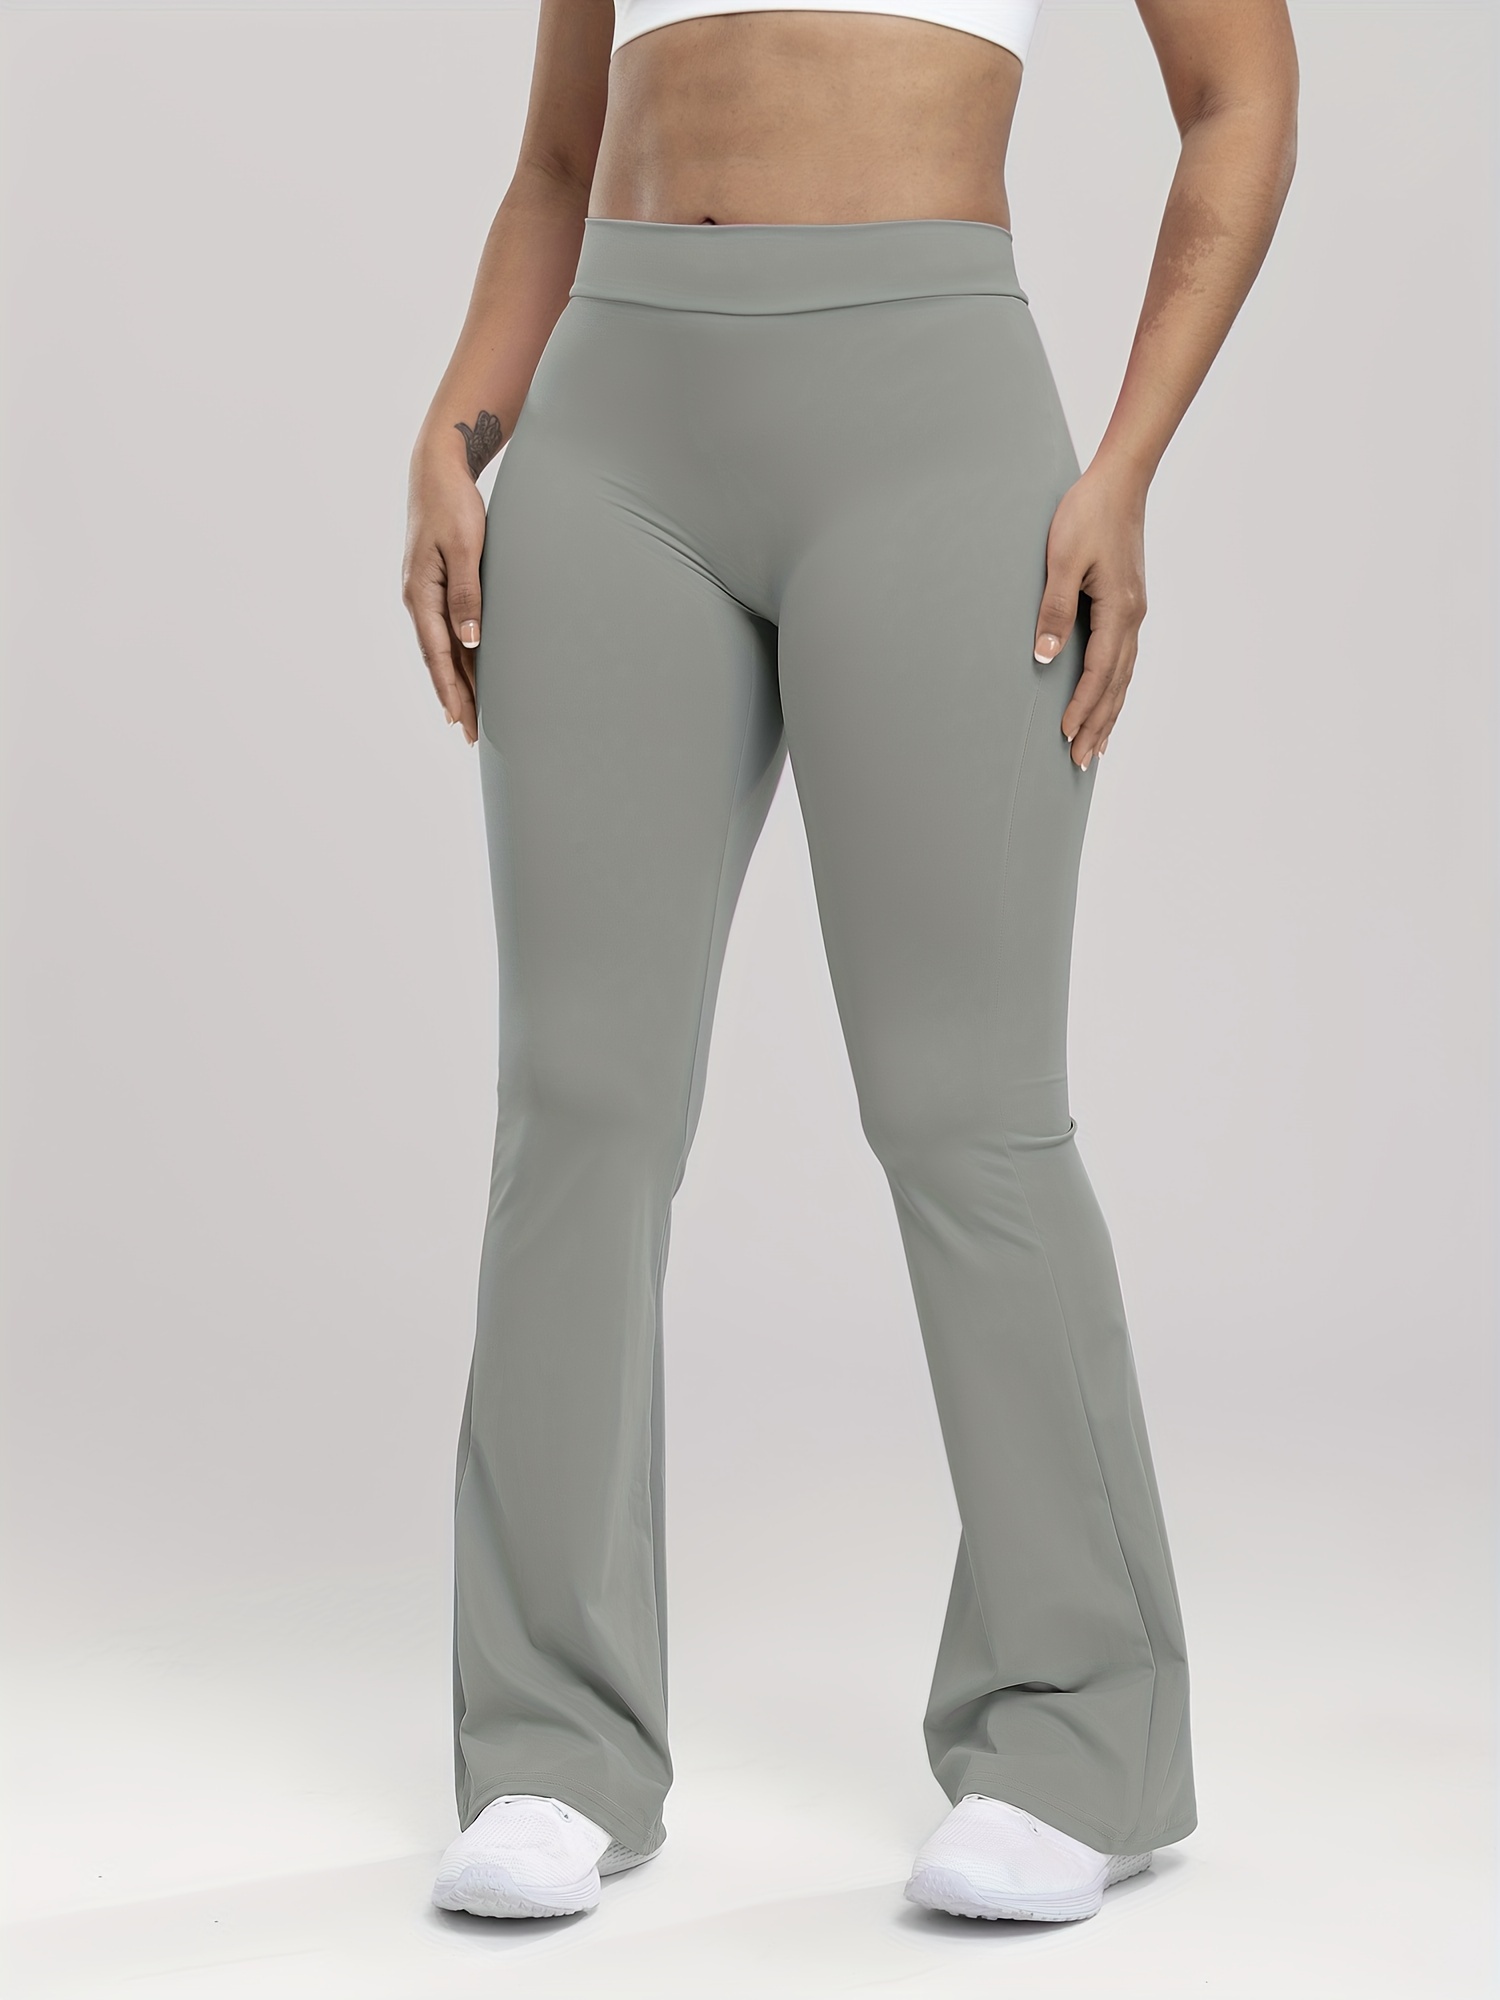 Athleta Women’s Gray Gusset Coolmax Yoga Pants Flared Leggings Size Medium  10/12 